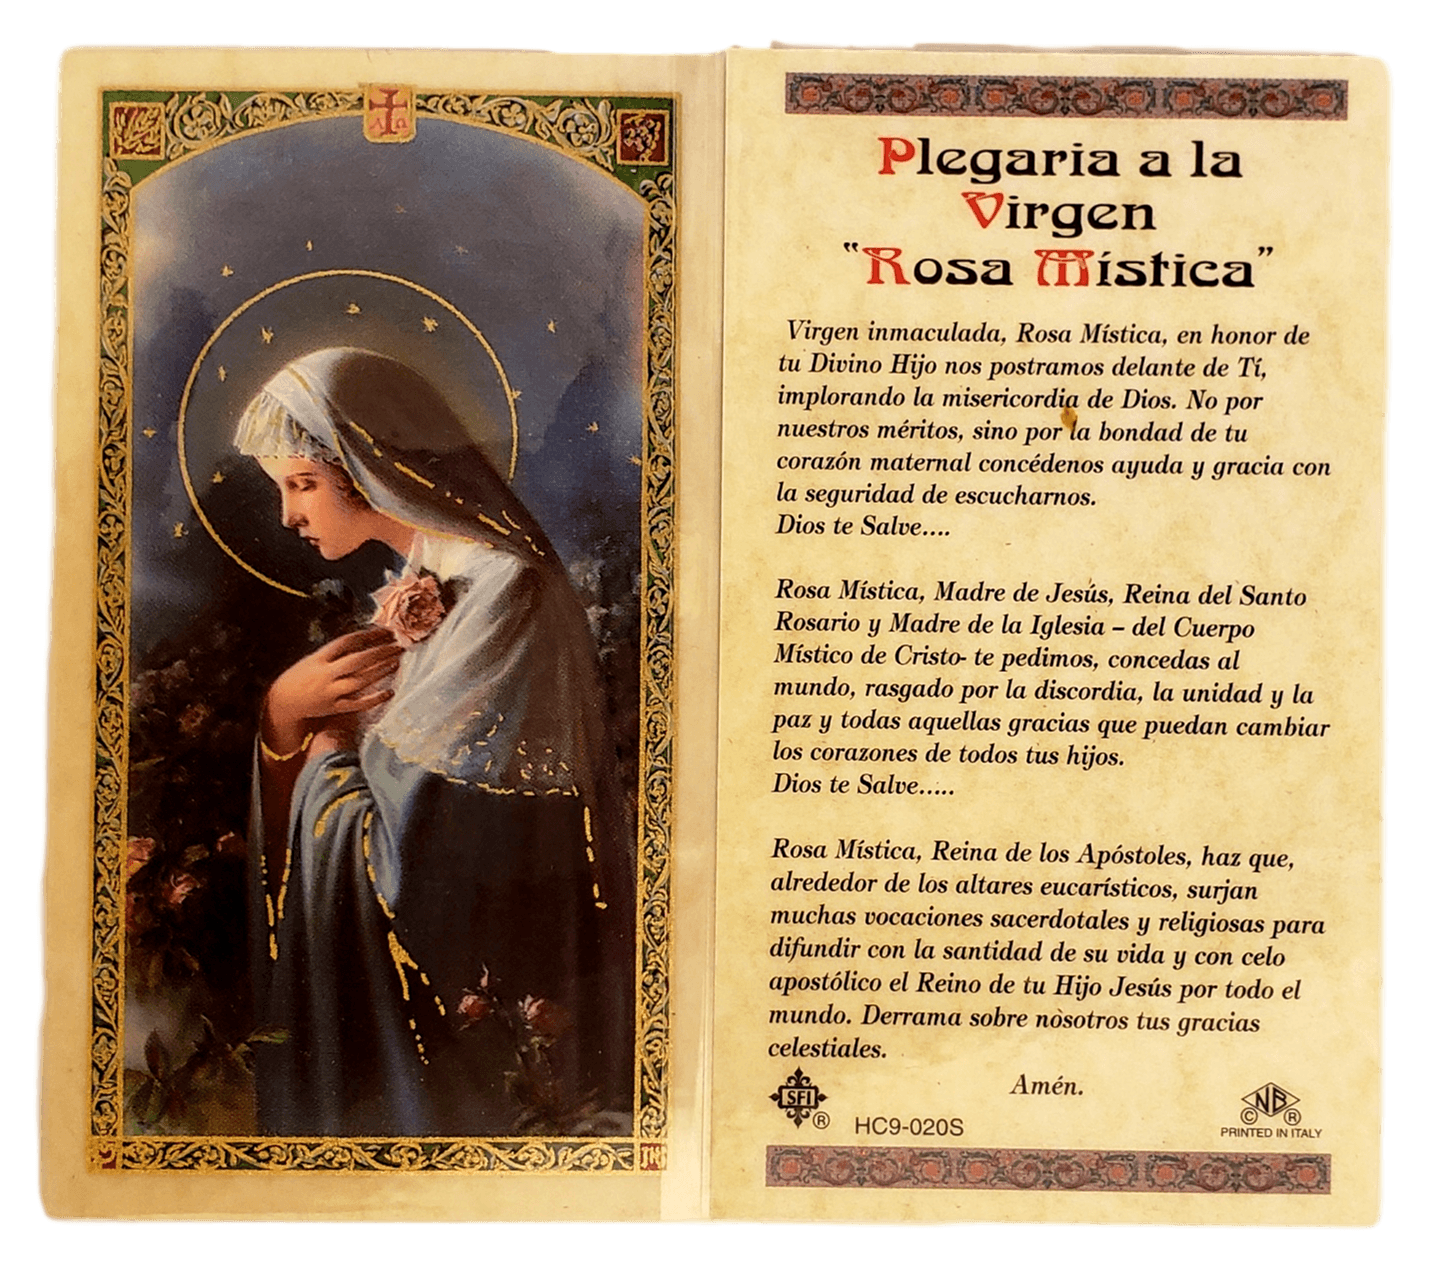 Prayer Card Plegaria A La Virgen Rosa Mistica SPANISH Laminated HC9-020S - Ysleta Mission Gift Shop- VOTED El Paso's Best Gift Shop